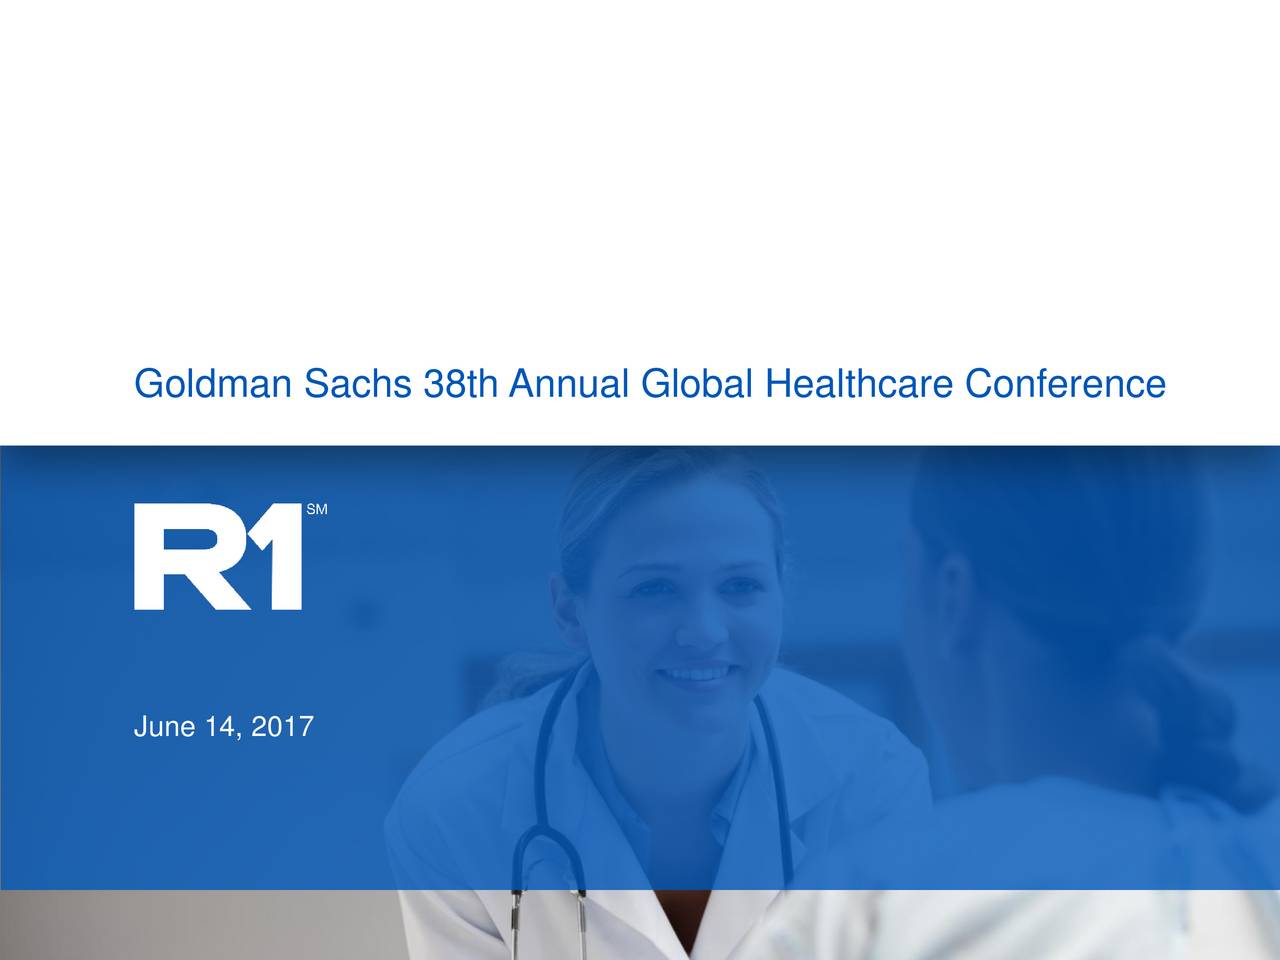 R1 RCM (RCM) Presents At Goldman Sachs 38th Annual Global Healthcare